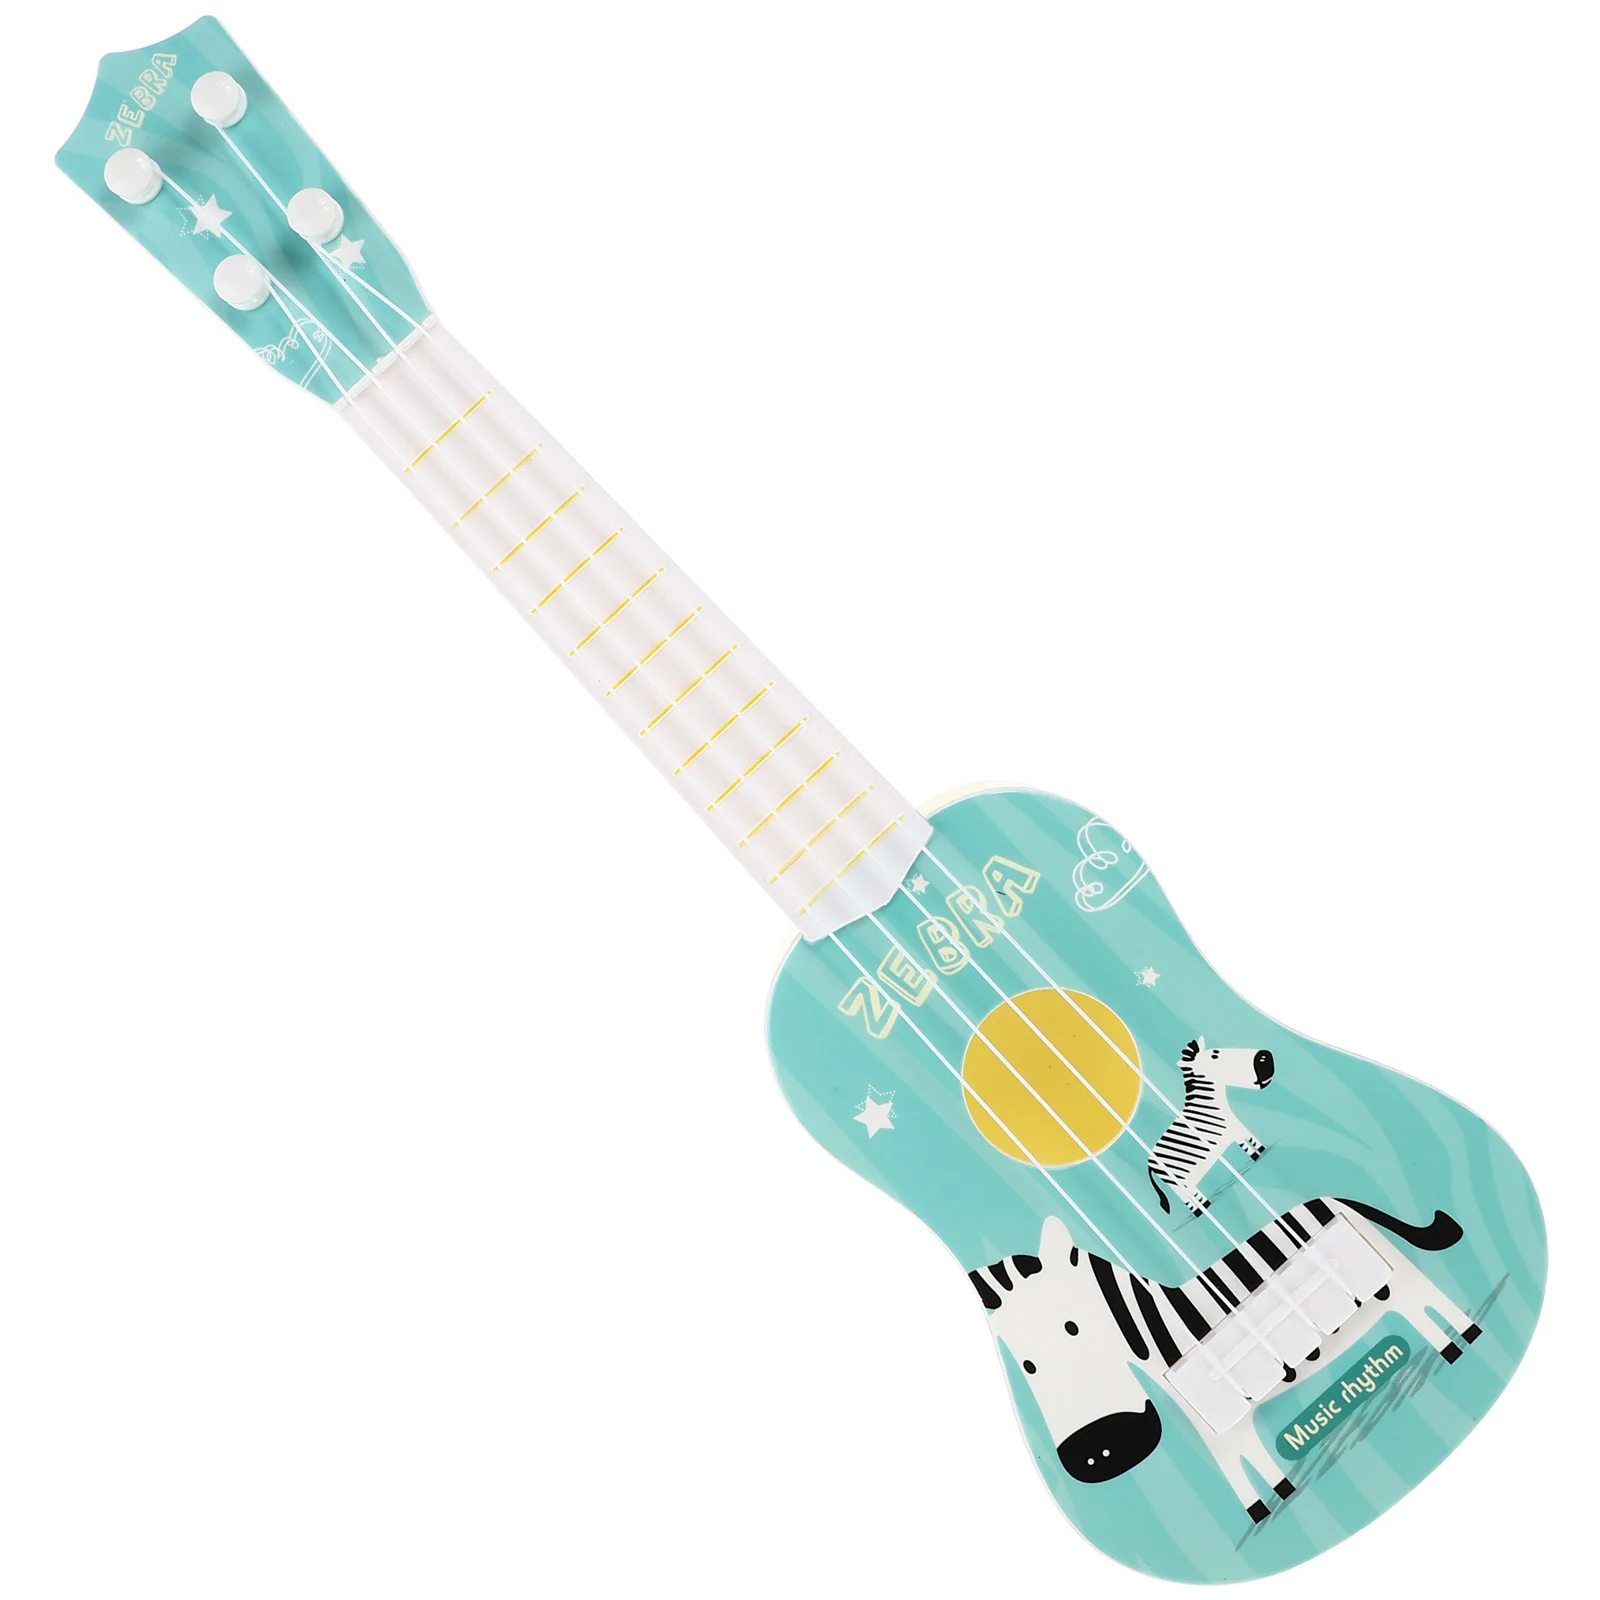 

Rabbit Beginner Classical Ukulele Guitar Musical Instrument Kids Childrens Toys for Children Early Education Leaning Toy Gift